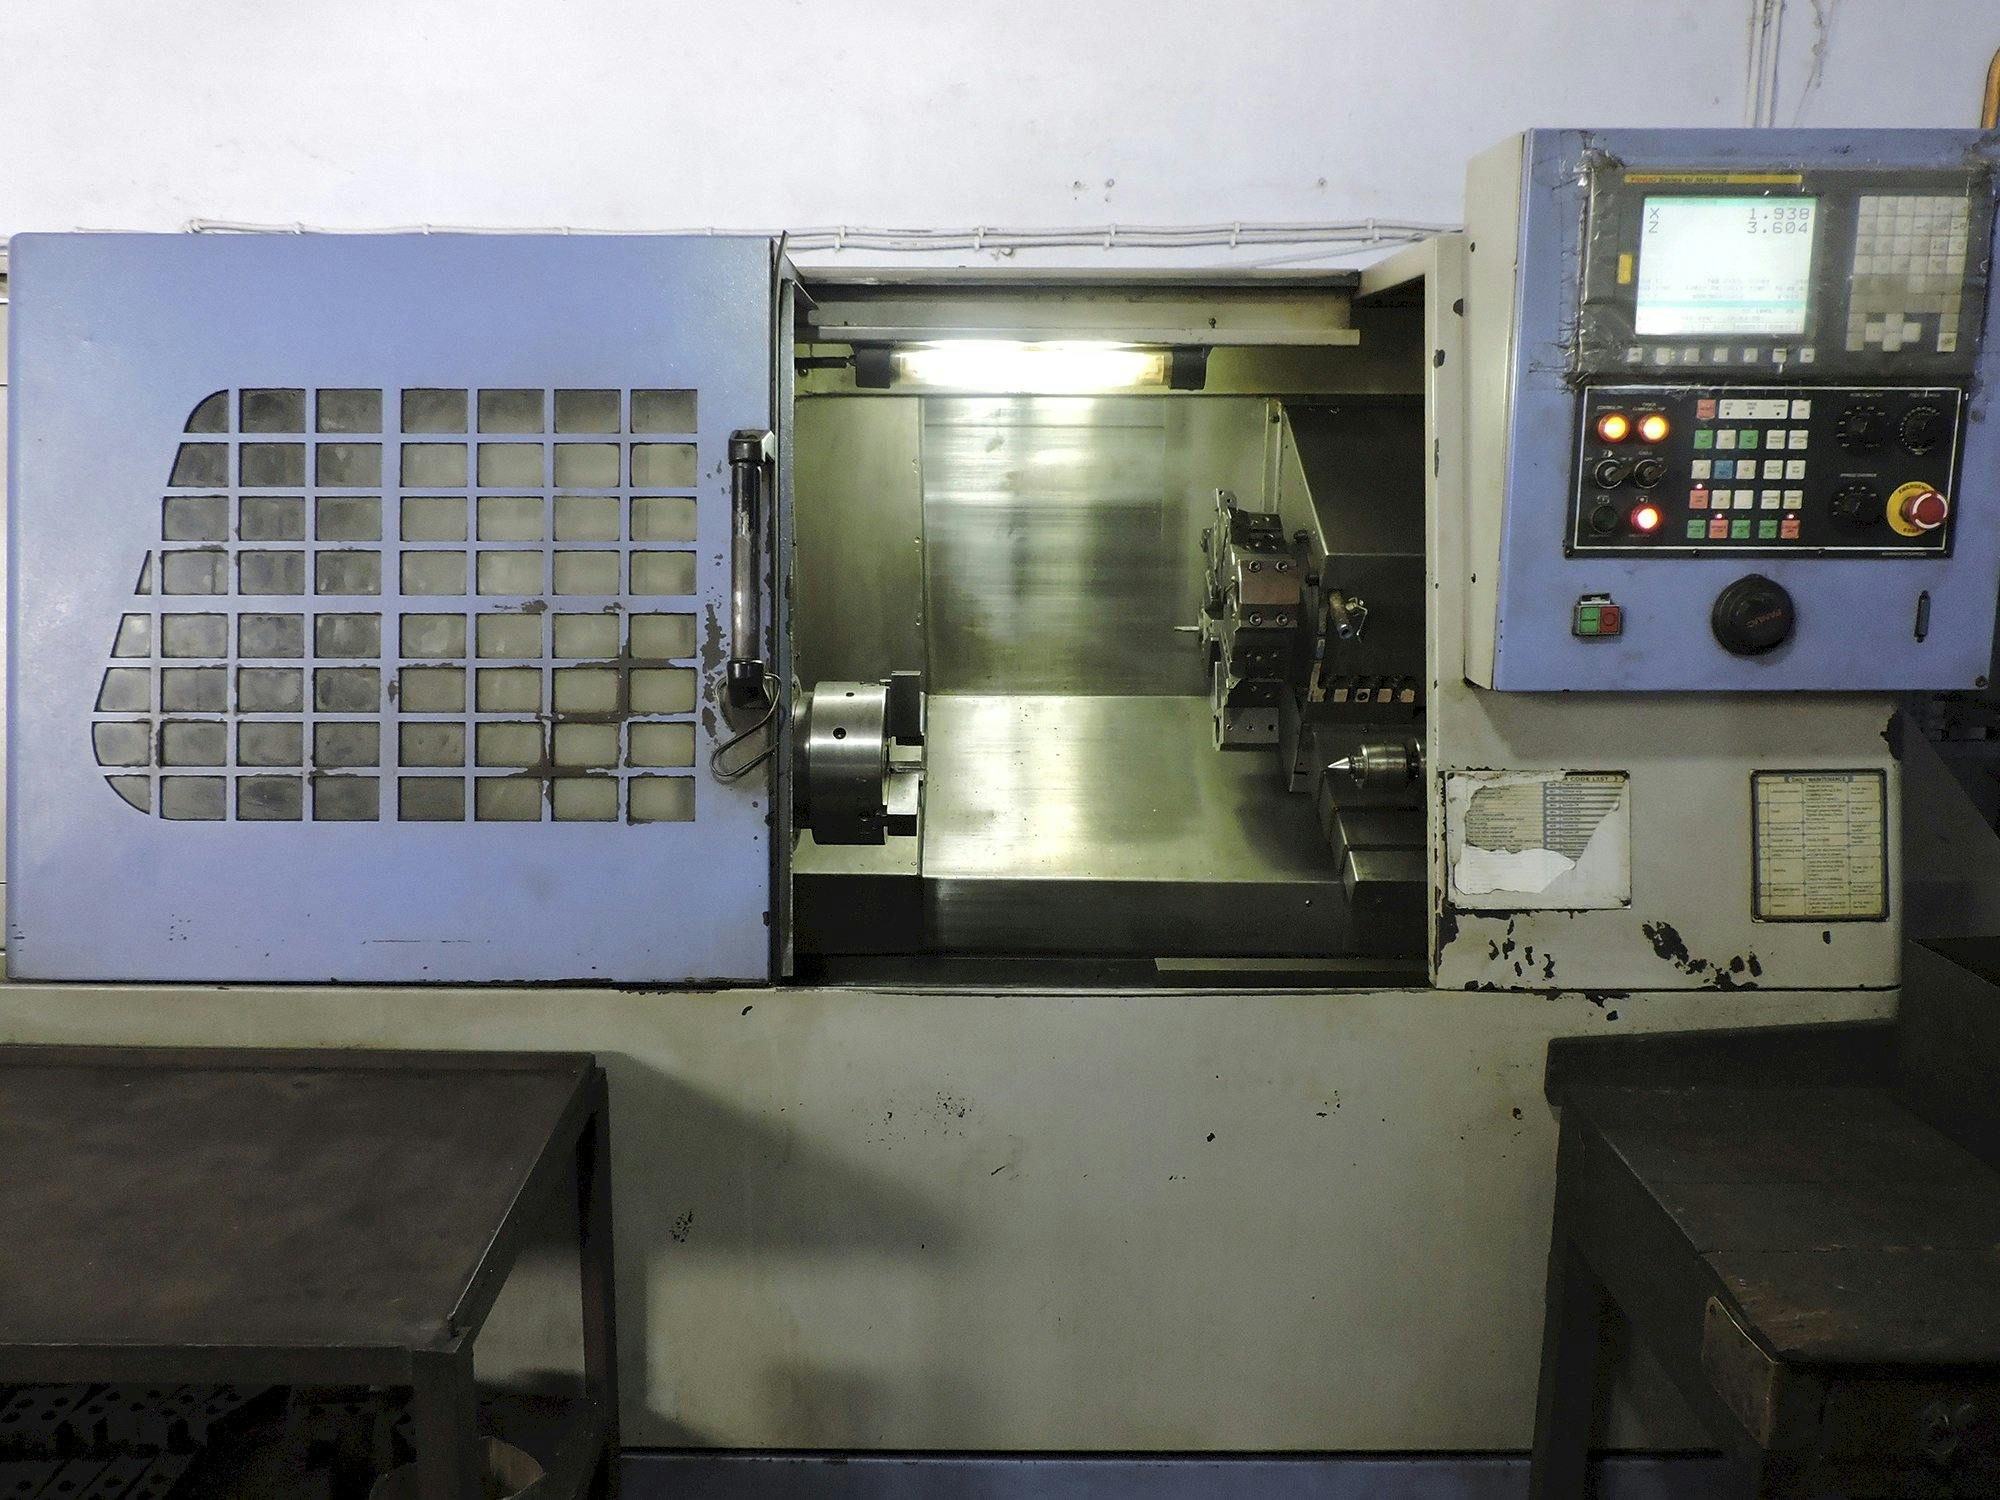 Front view of Macpower VX-200 Machine